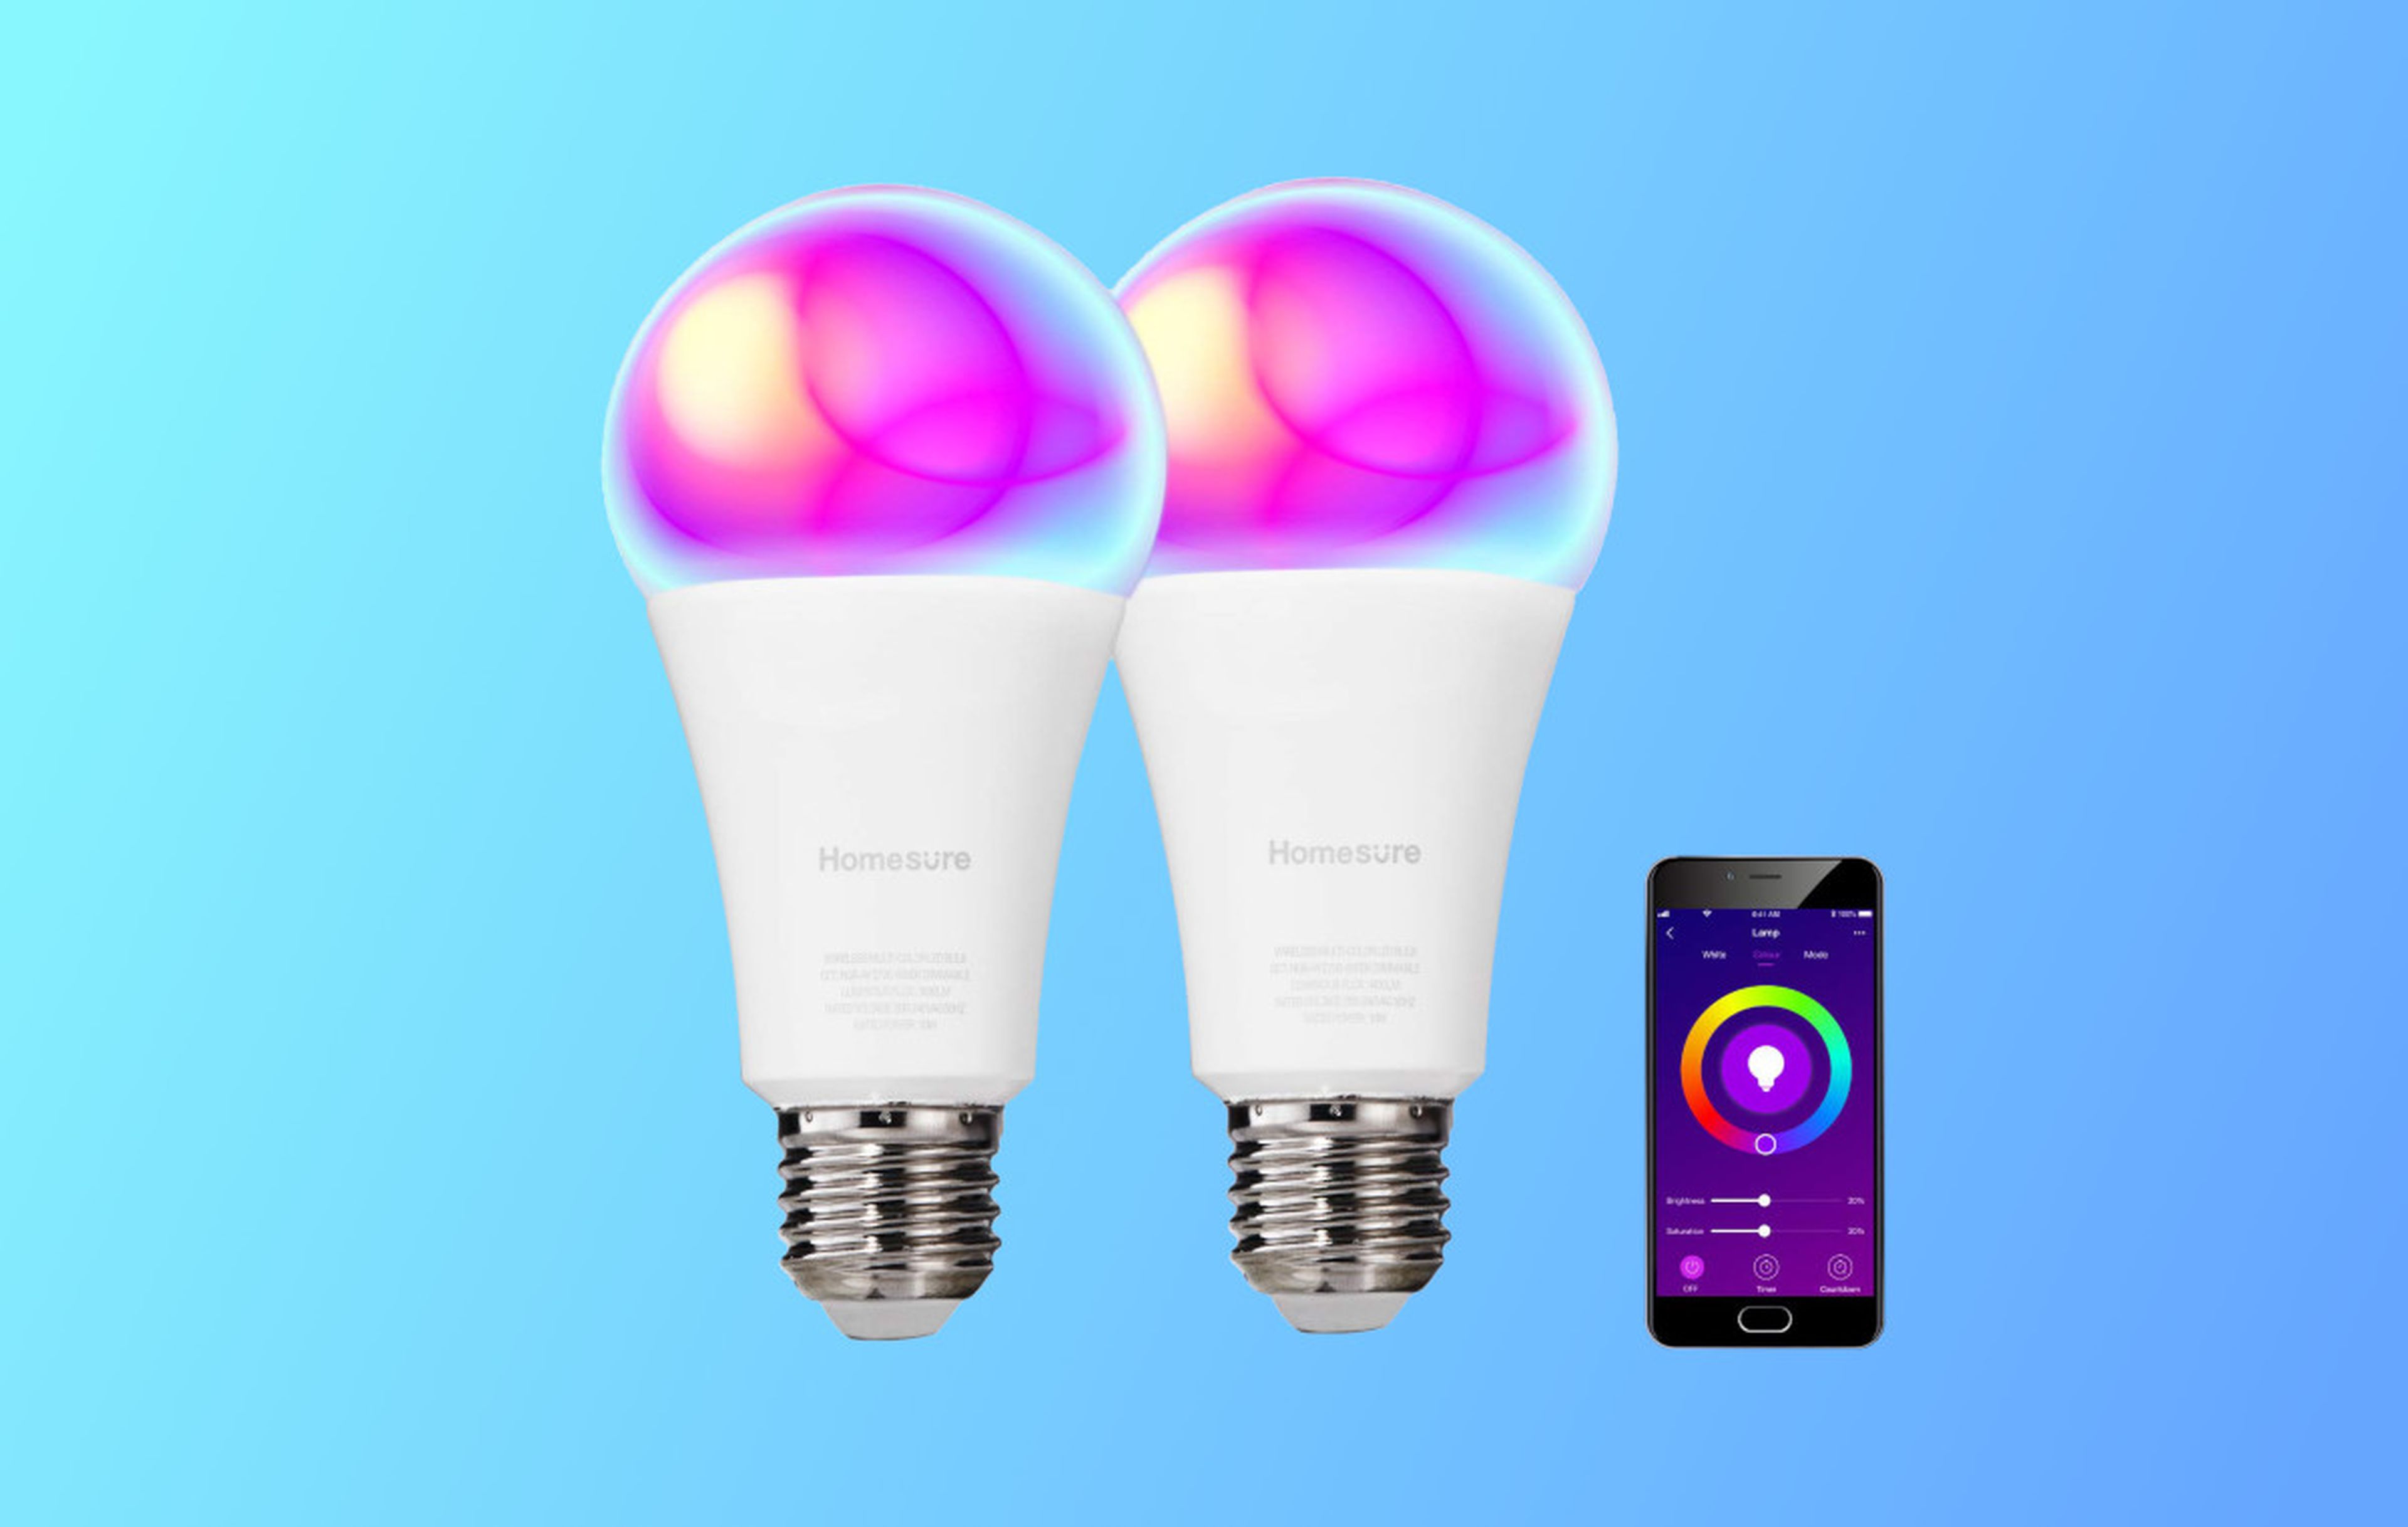 Pack de dos bombillas inteligentes RGB de Bedsure